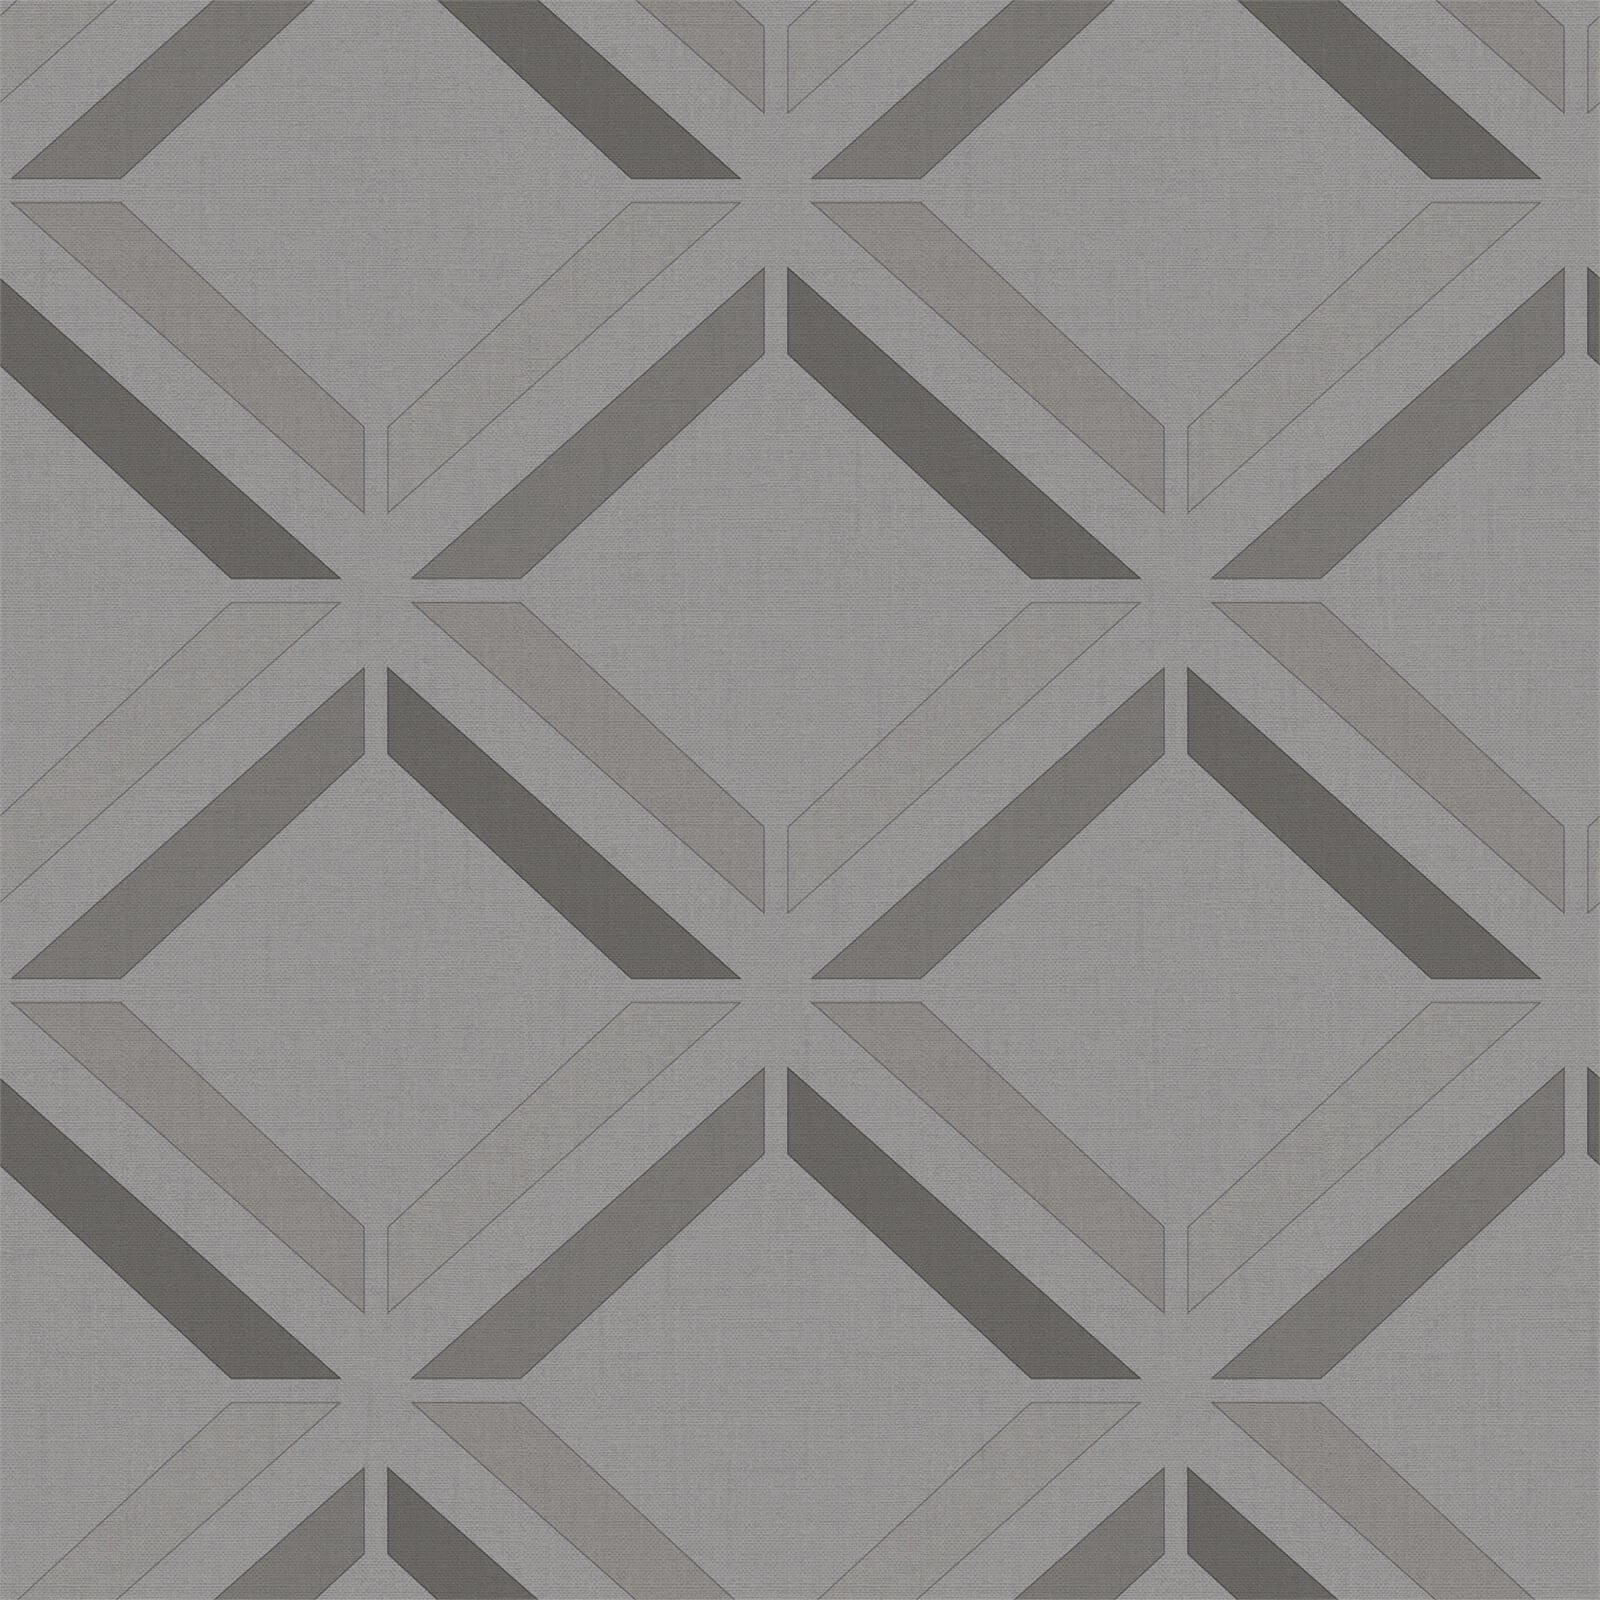 Holden Decor Lana Geometric Smooth Glitter Grey Wallpaper